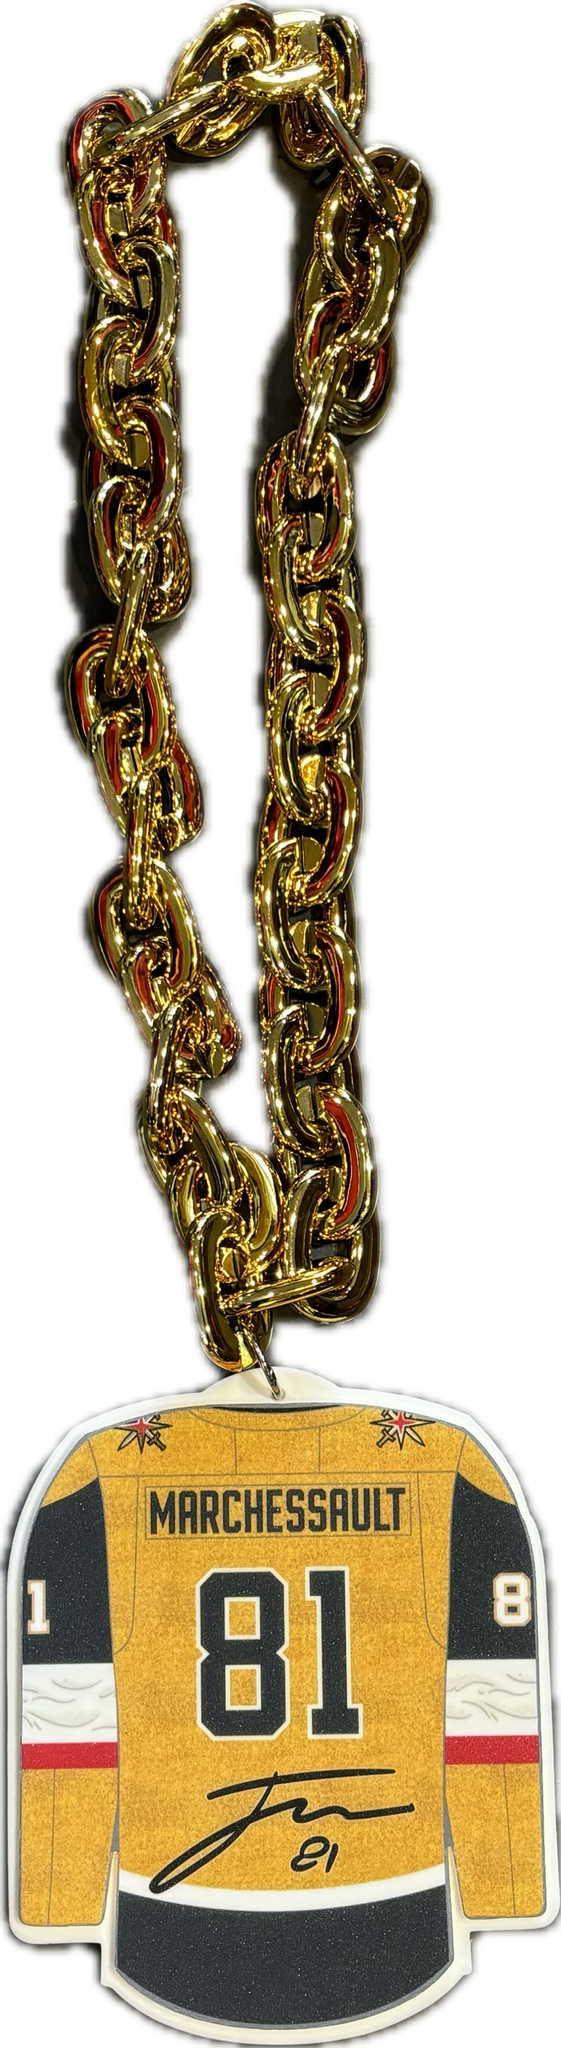 Vegas Golden Knights Marchessault Fan Chain 10 Inch 3D Foam Necklace-GOLD CHAIN